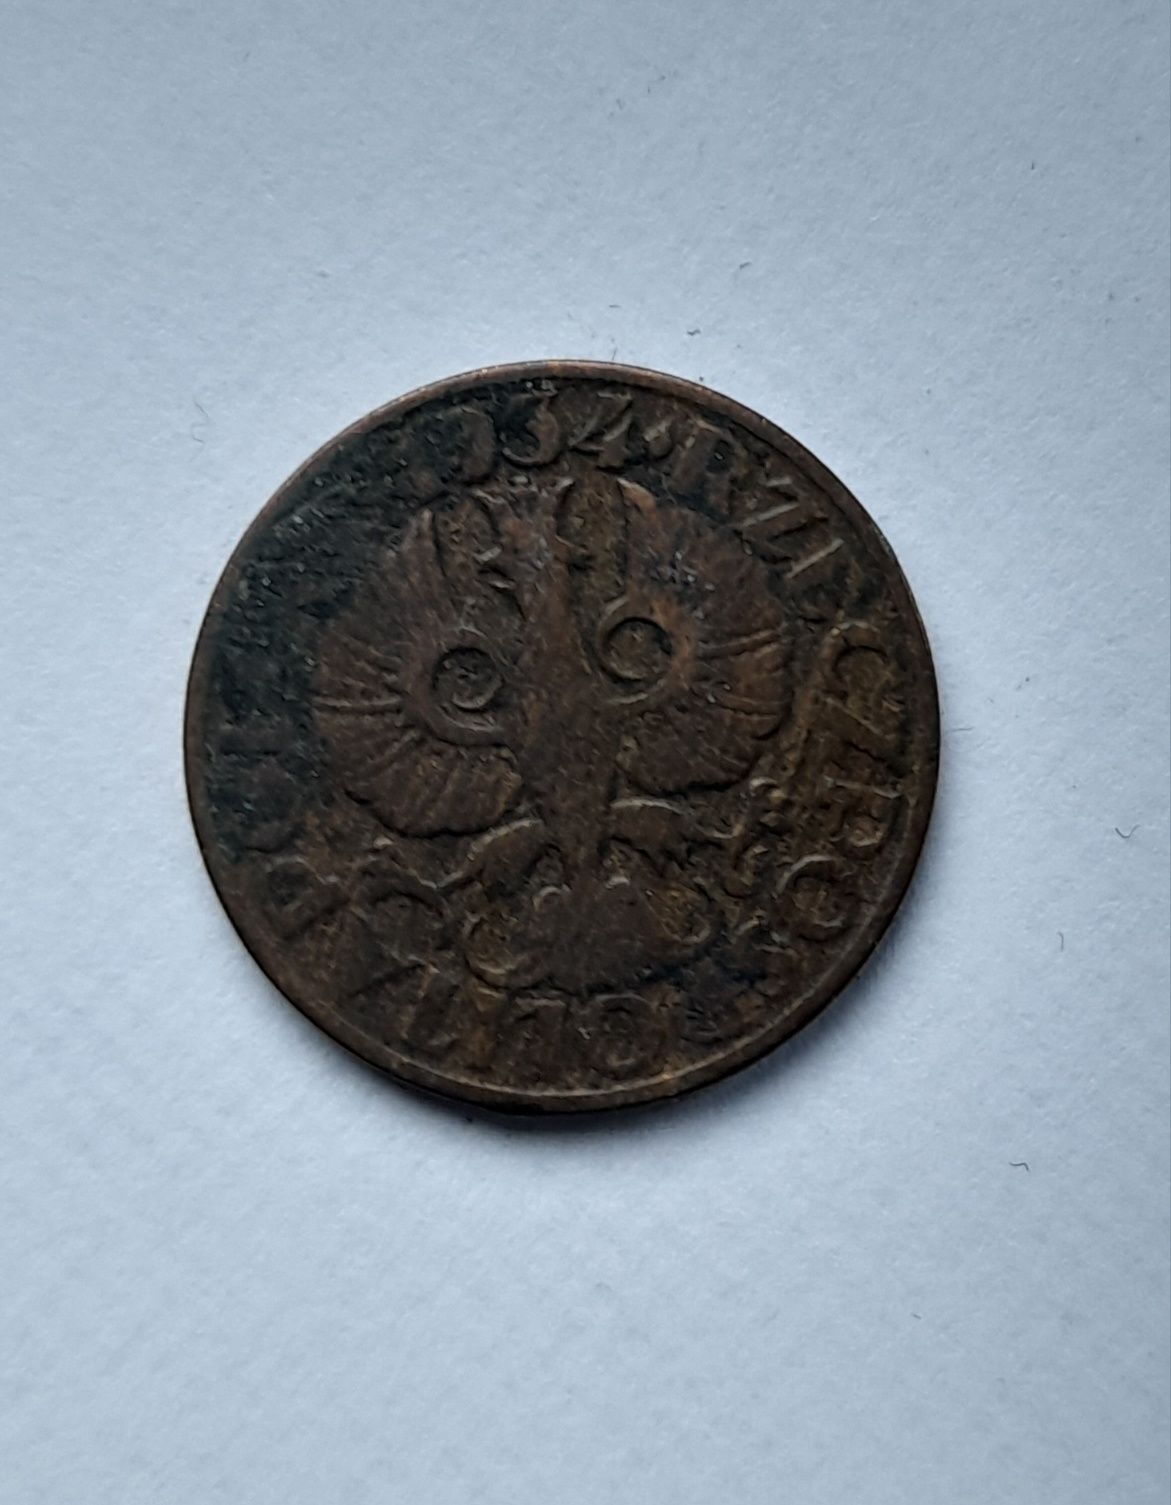 Moneta 2 grosze z 1934 roku.